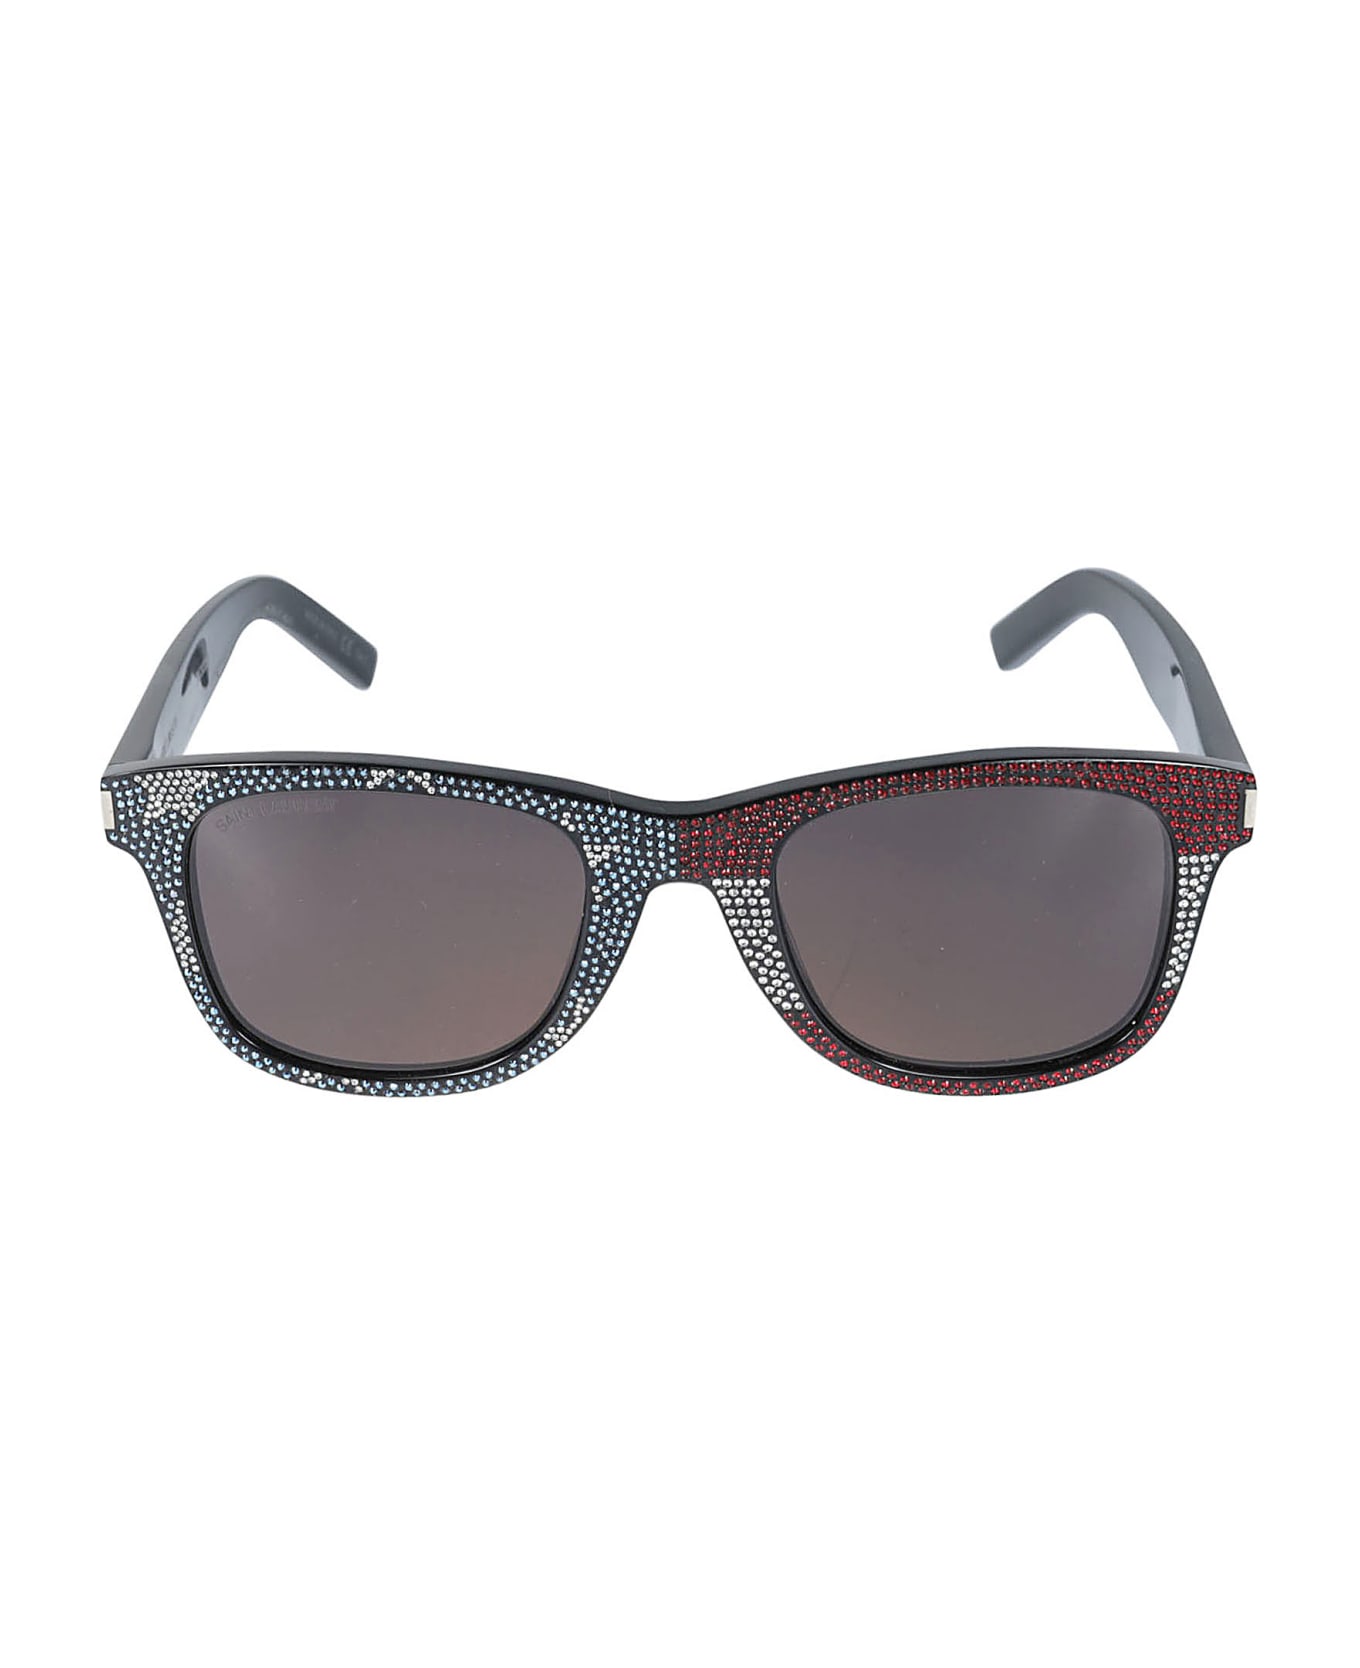 Saint Laurent Eyewear Square Frame Studded Sunglasses - Black/Grey